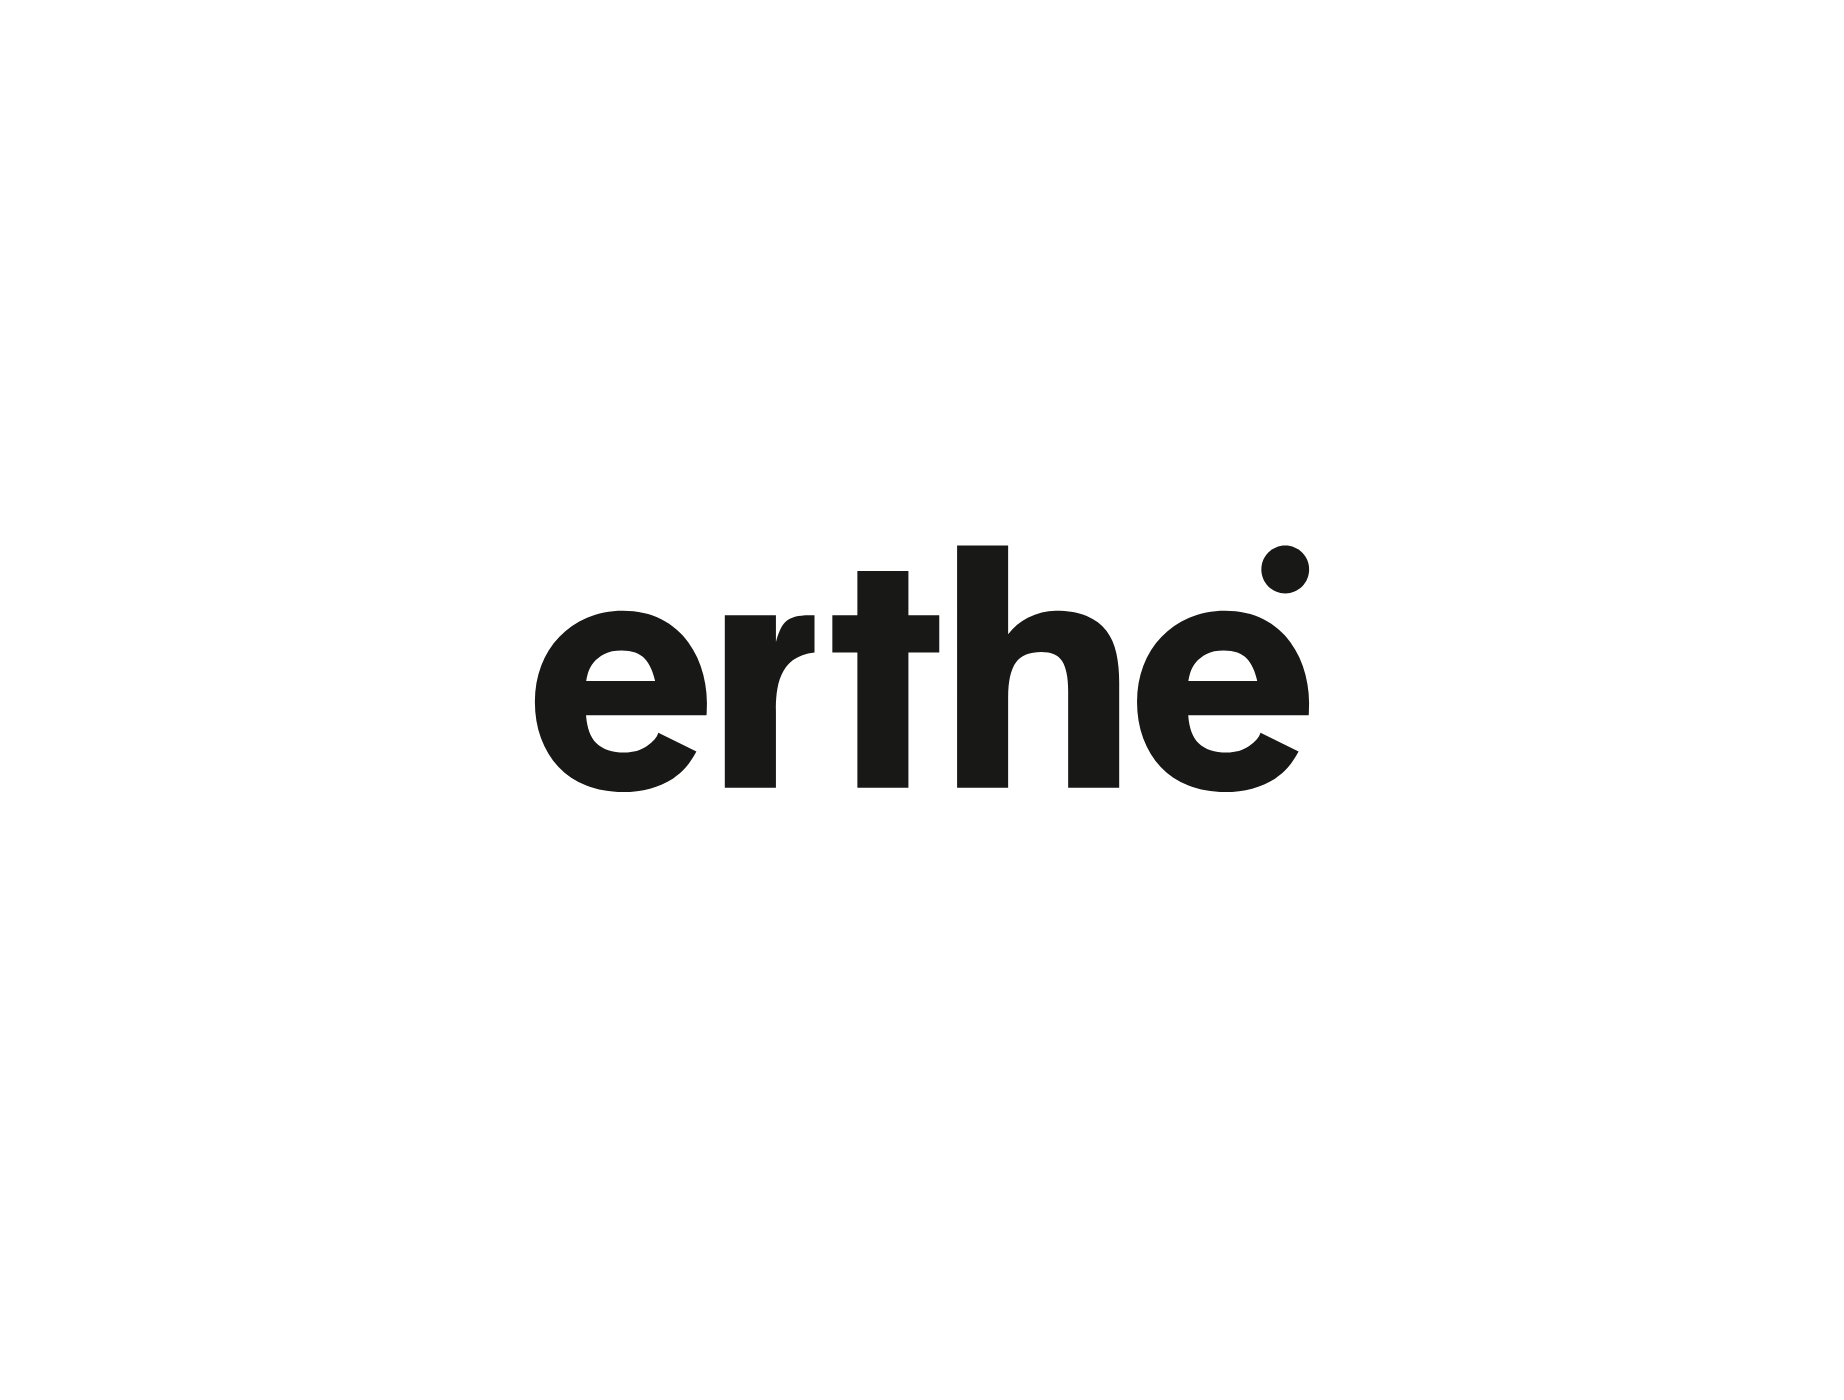 Erthe logo